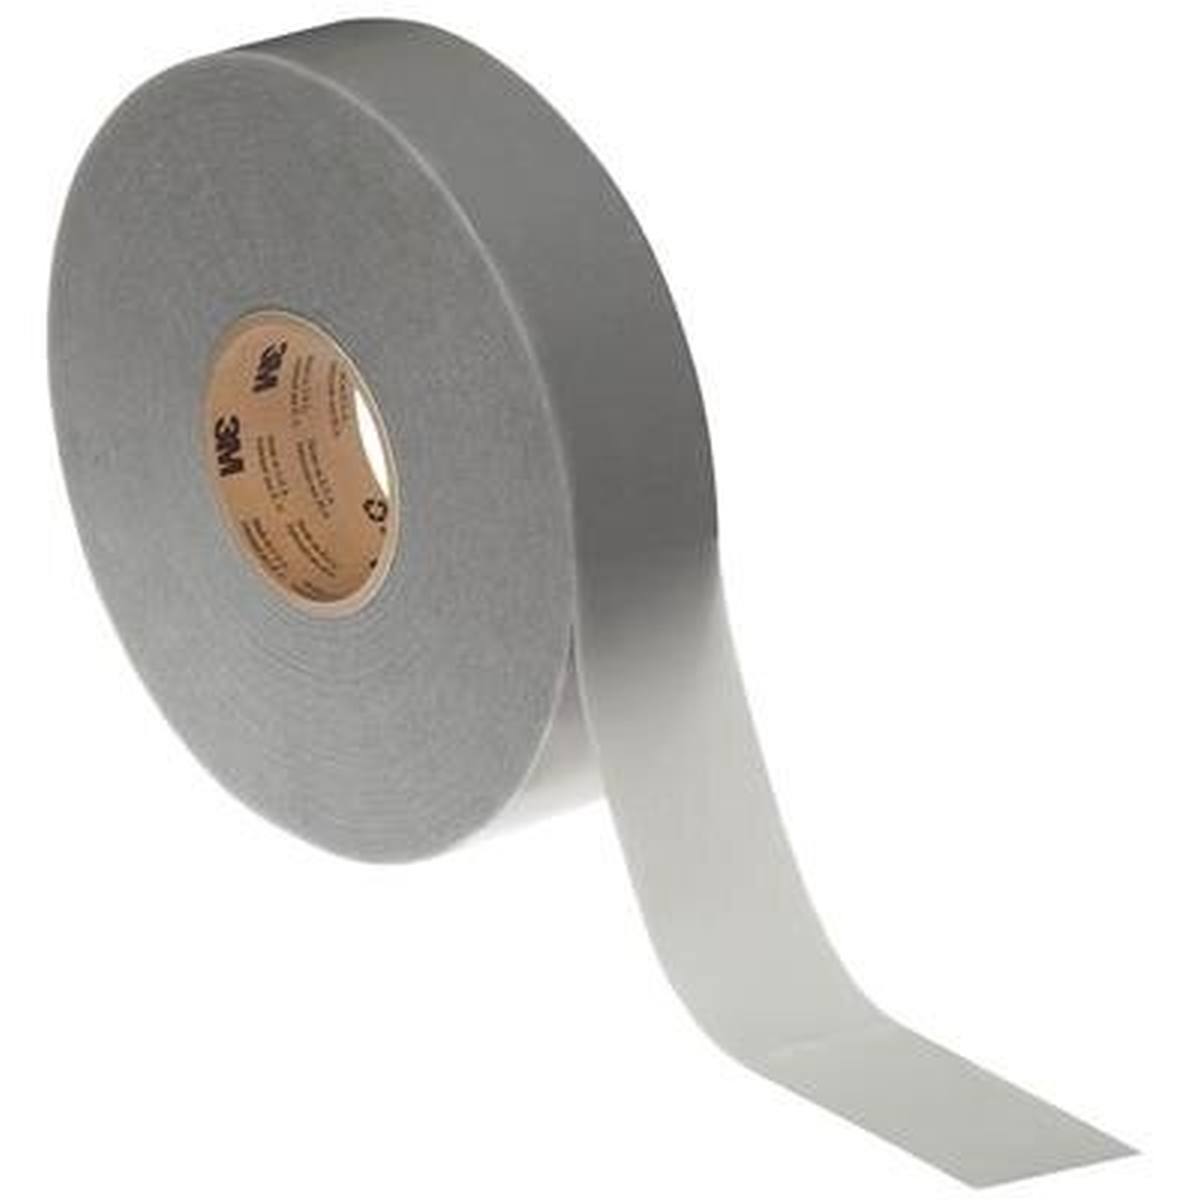 3M high-performance sealing tape 4411G, 25 mm x 16.5 m, 1 mm, gray